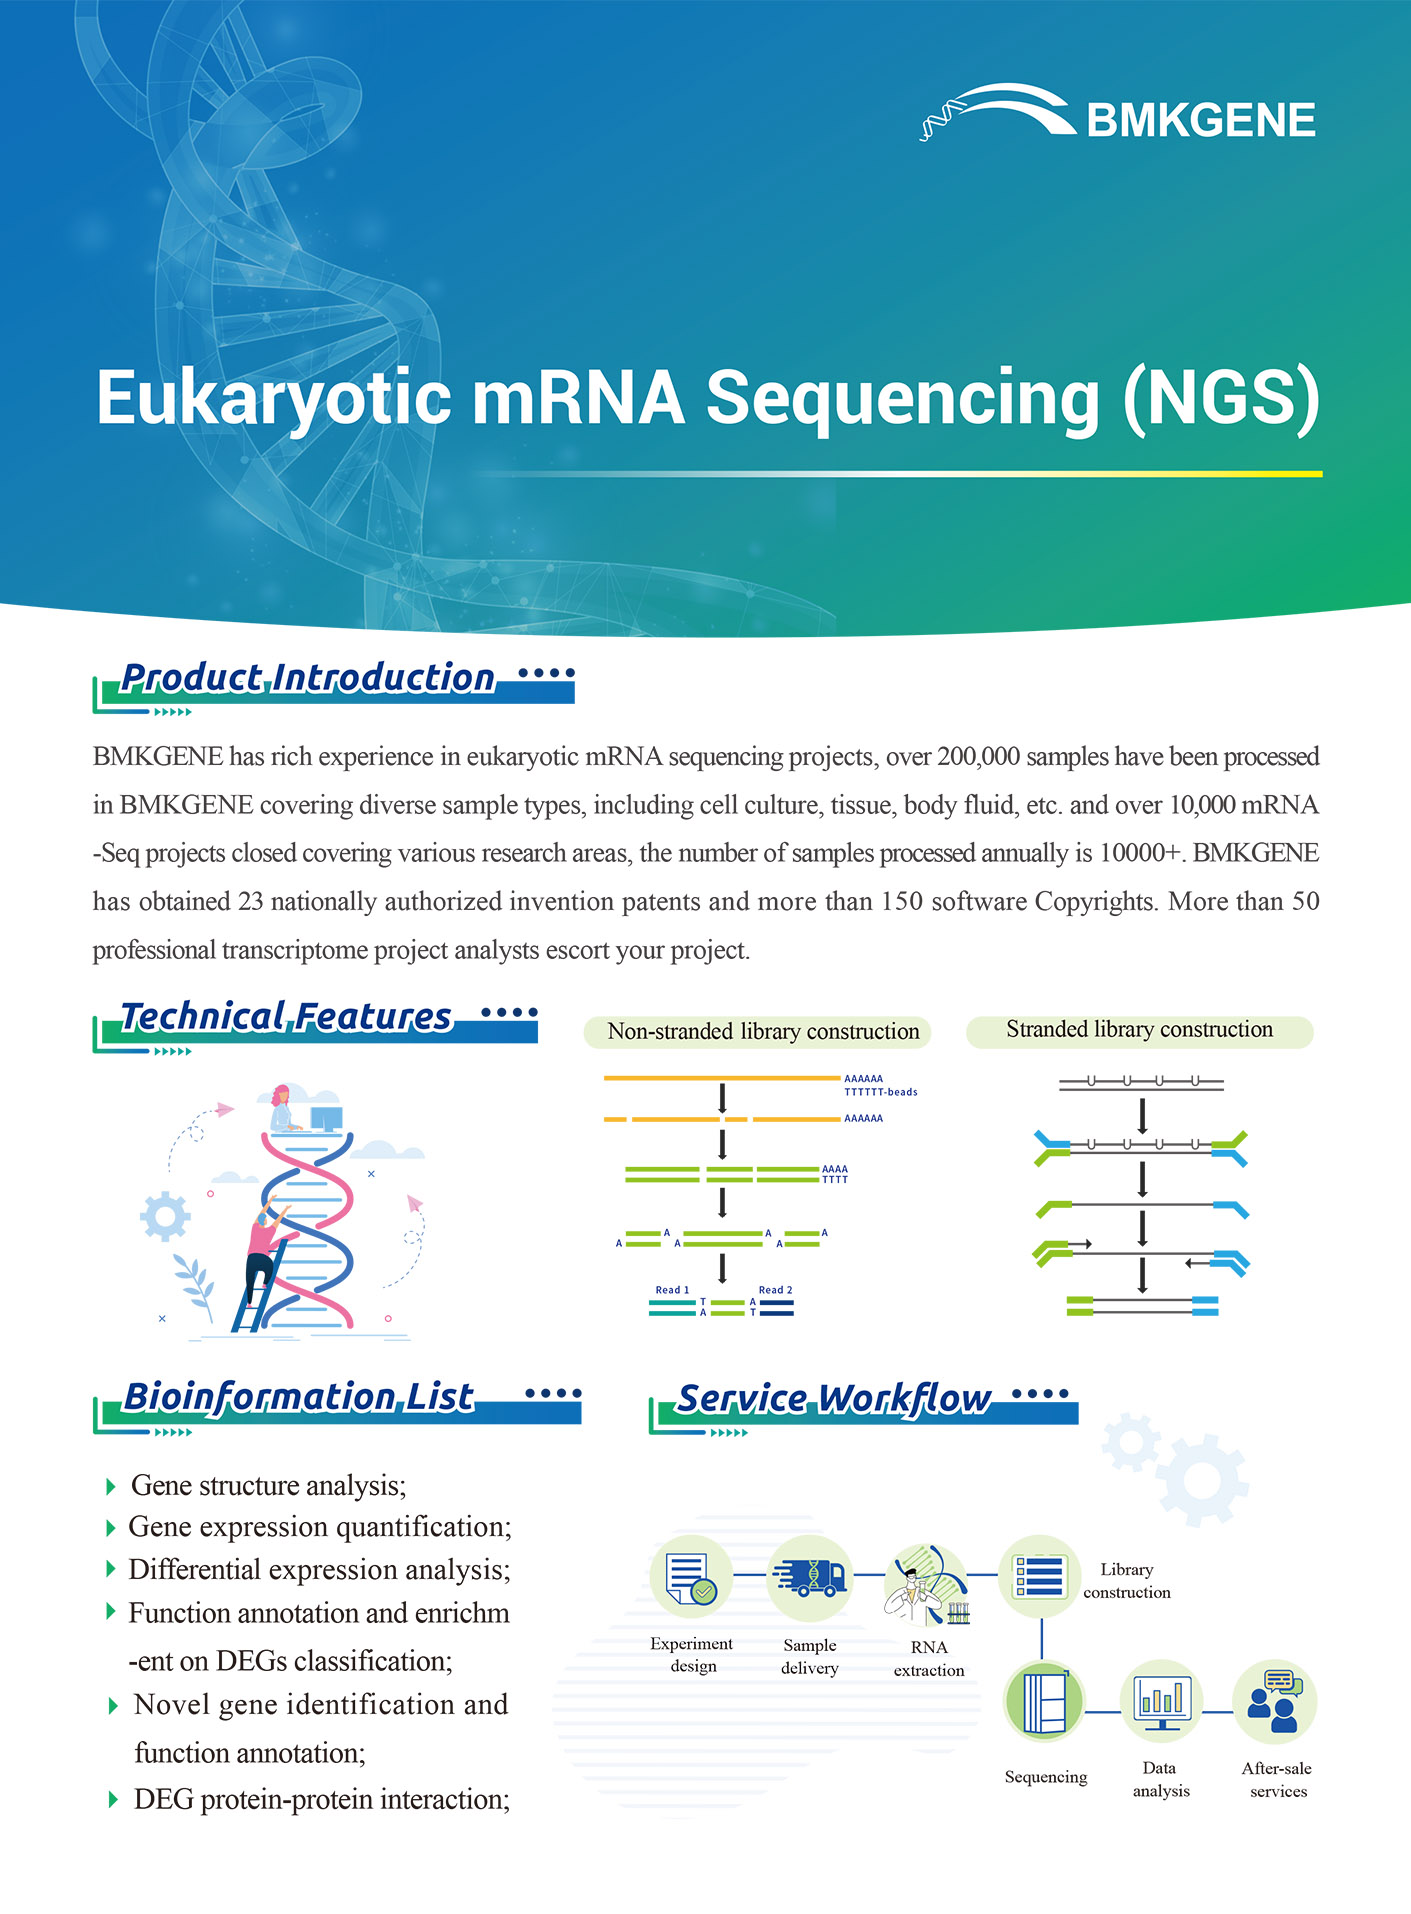 http://www.bmkgene.com/uploads/Eukaryotic-mRNA-Sequencing-NGS-BMKGENE-2023.123.pdf